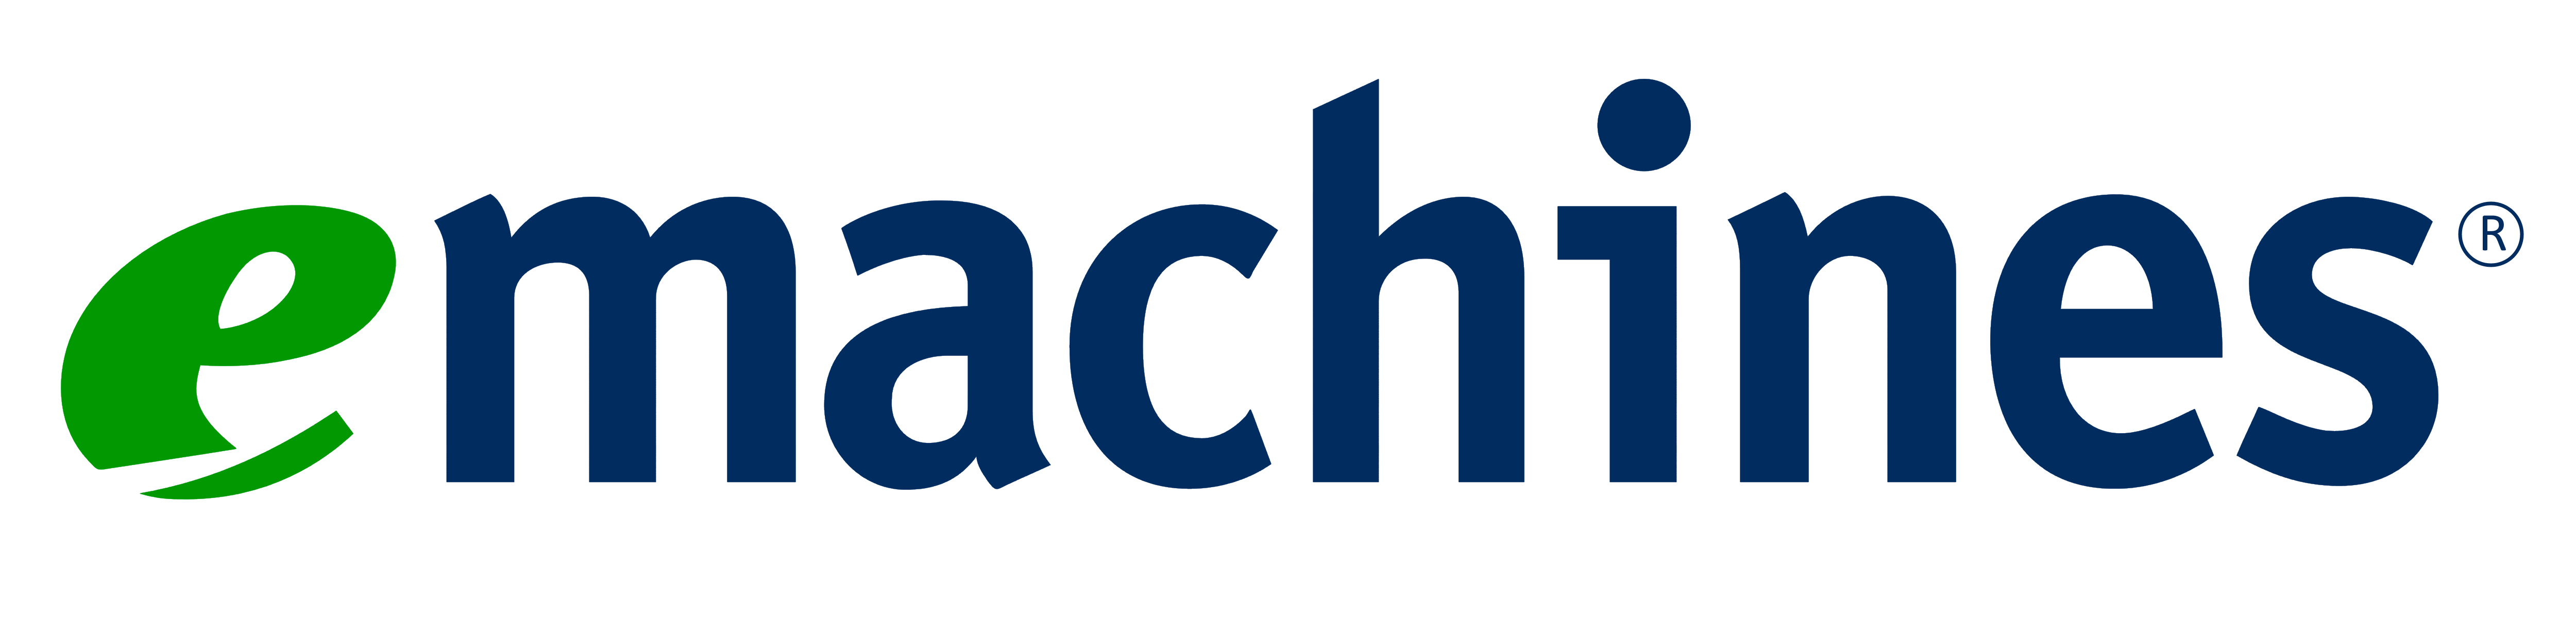 eMachines logo, logotype